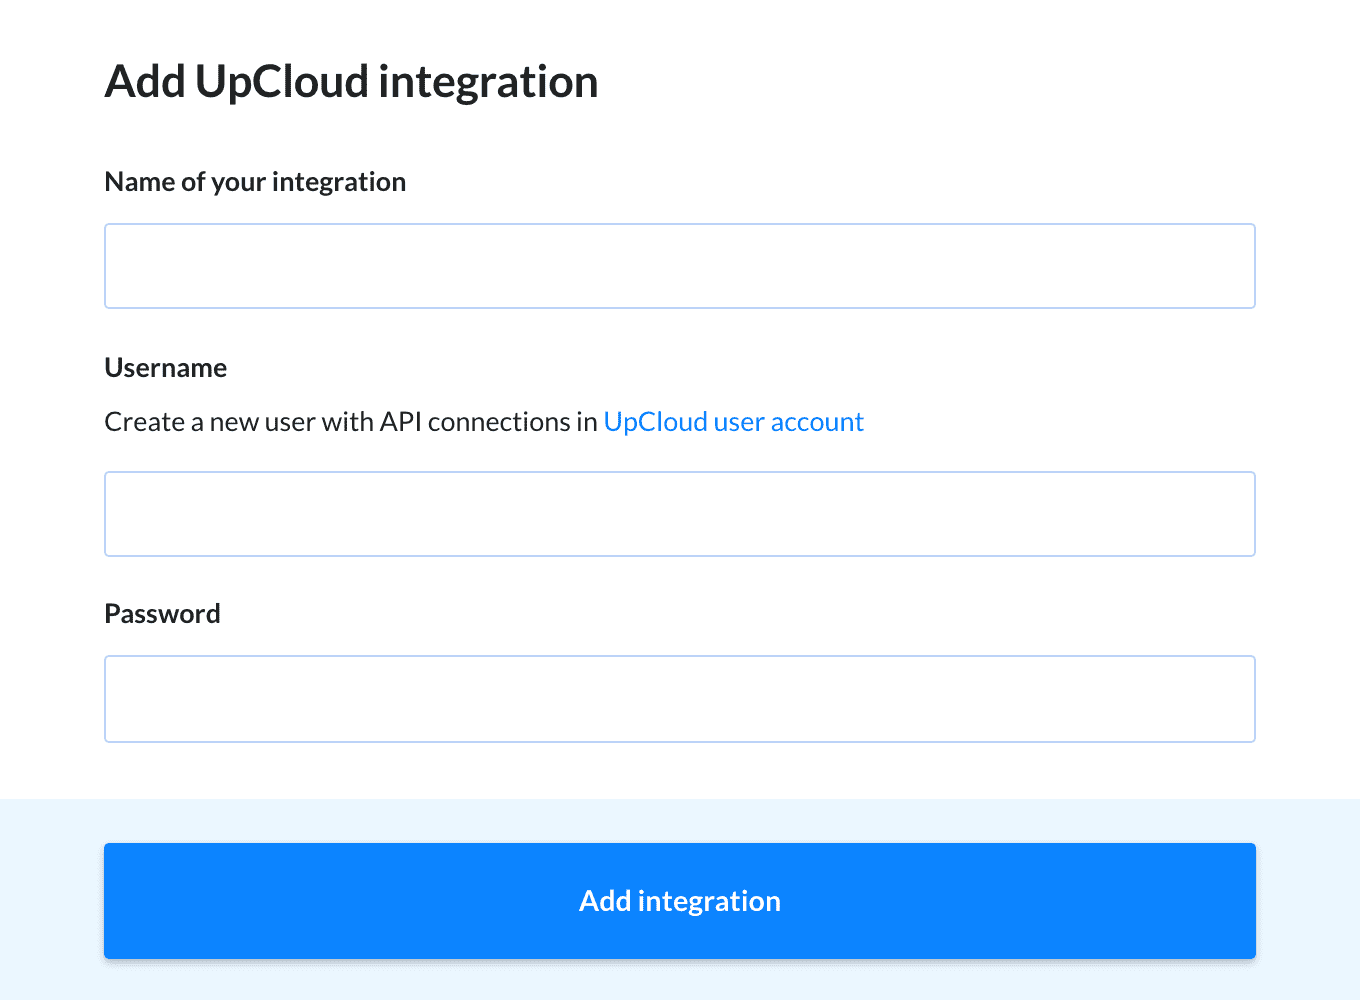 Adding UpCloud integration